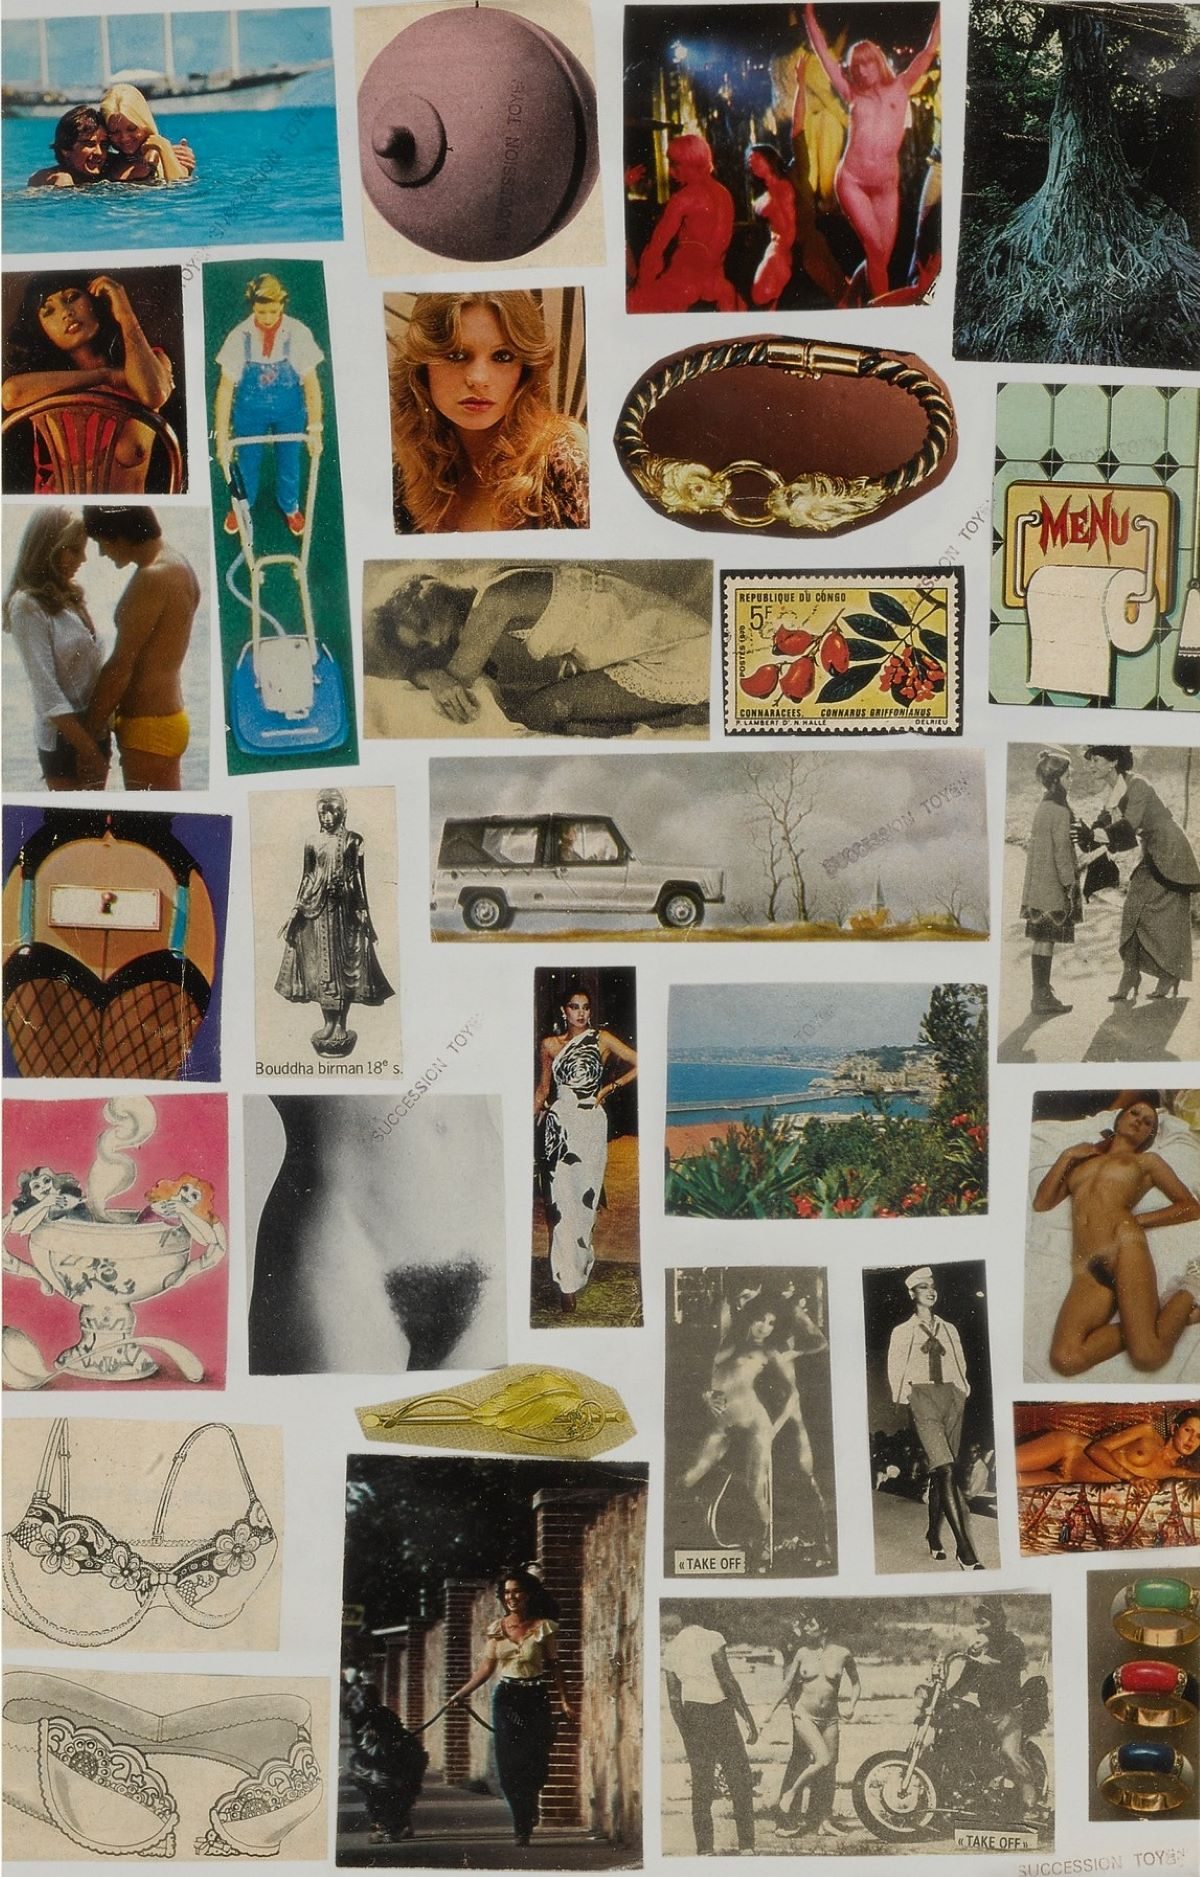 Toyen, artist, surrealist, feminist, transgender, collage, Czech